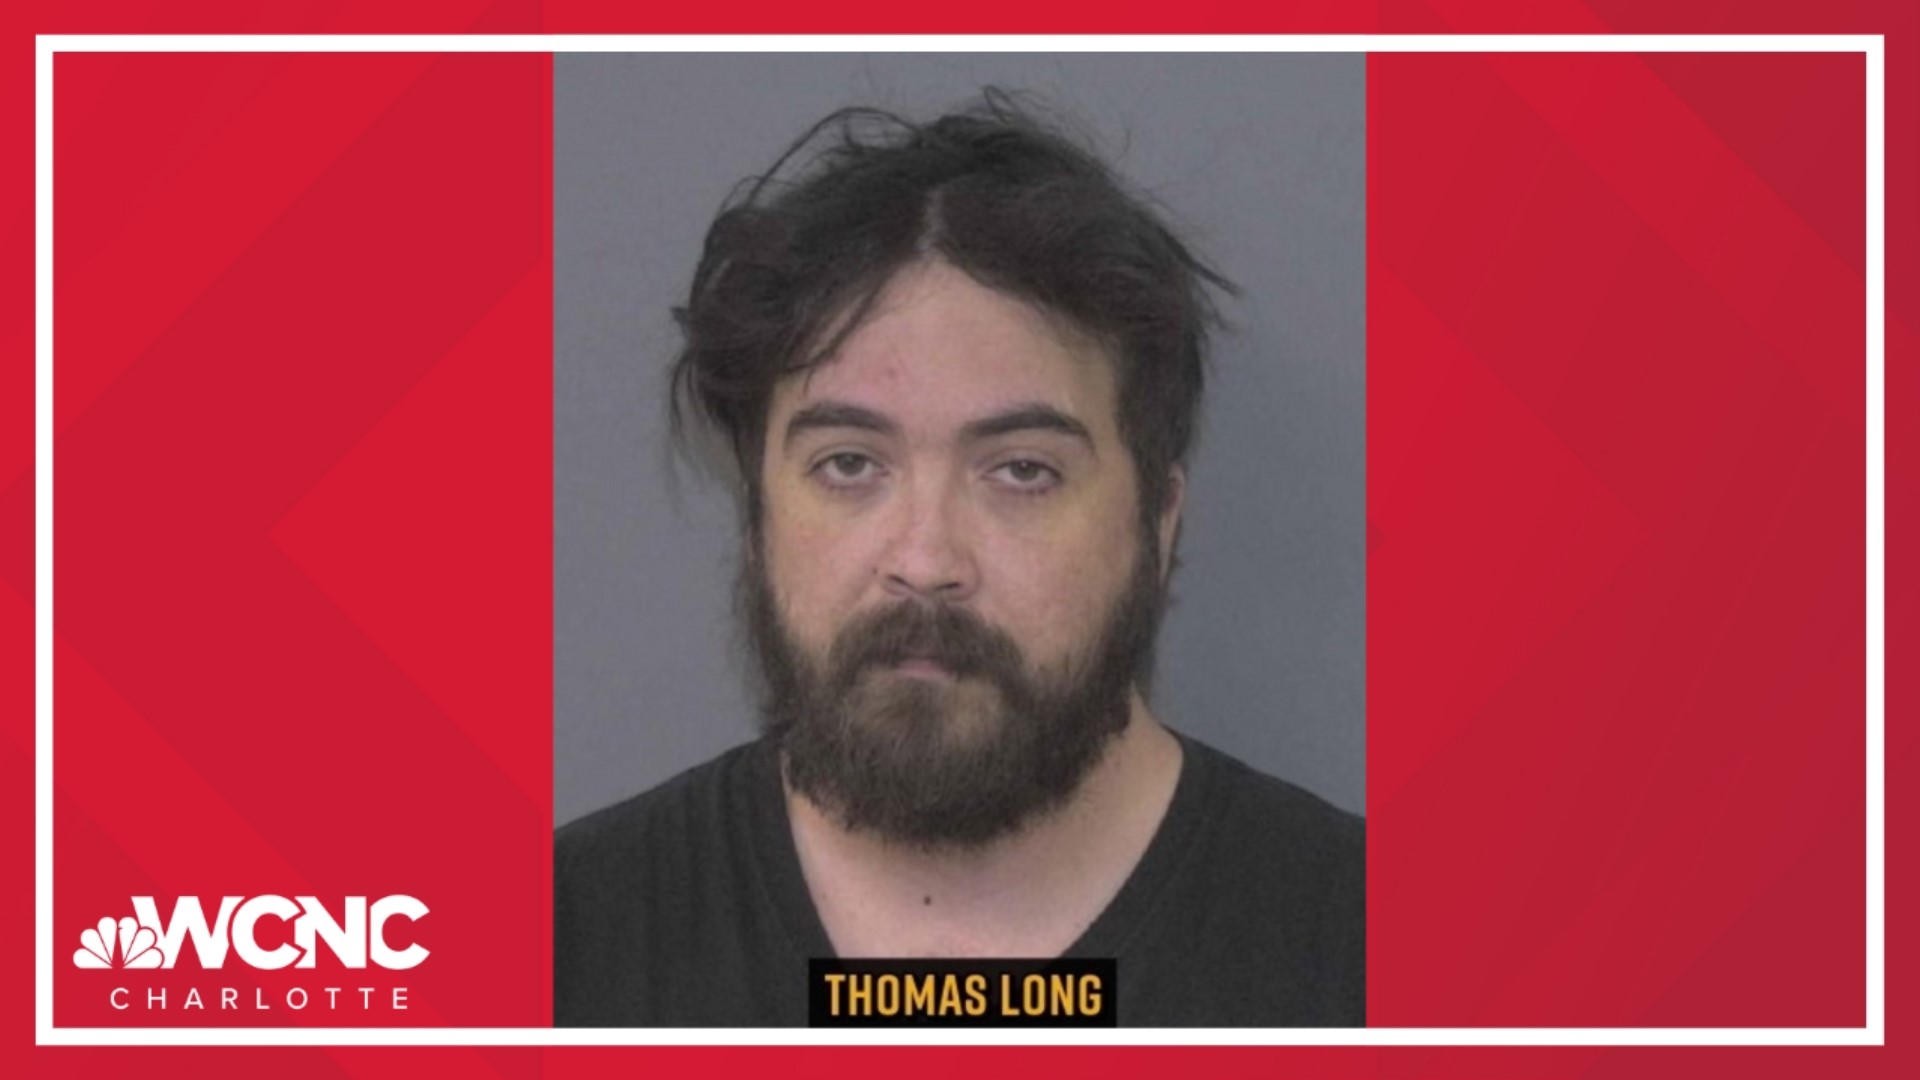 Thomas Long was arrested late last week.